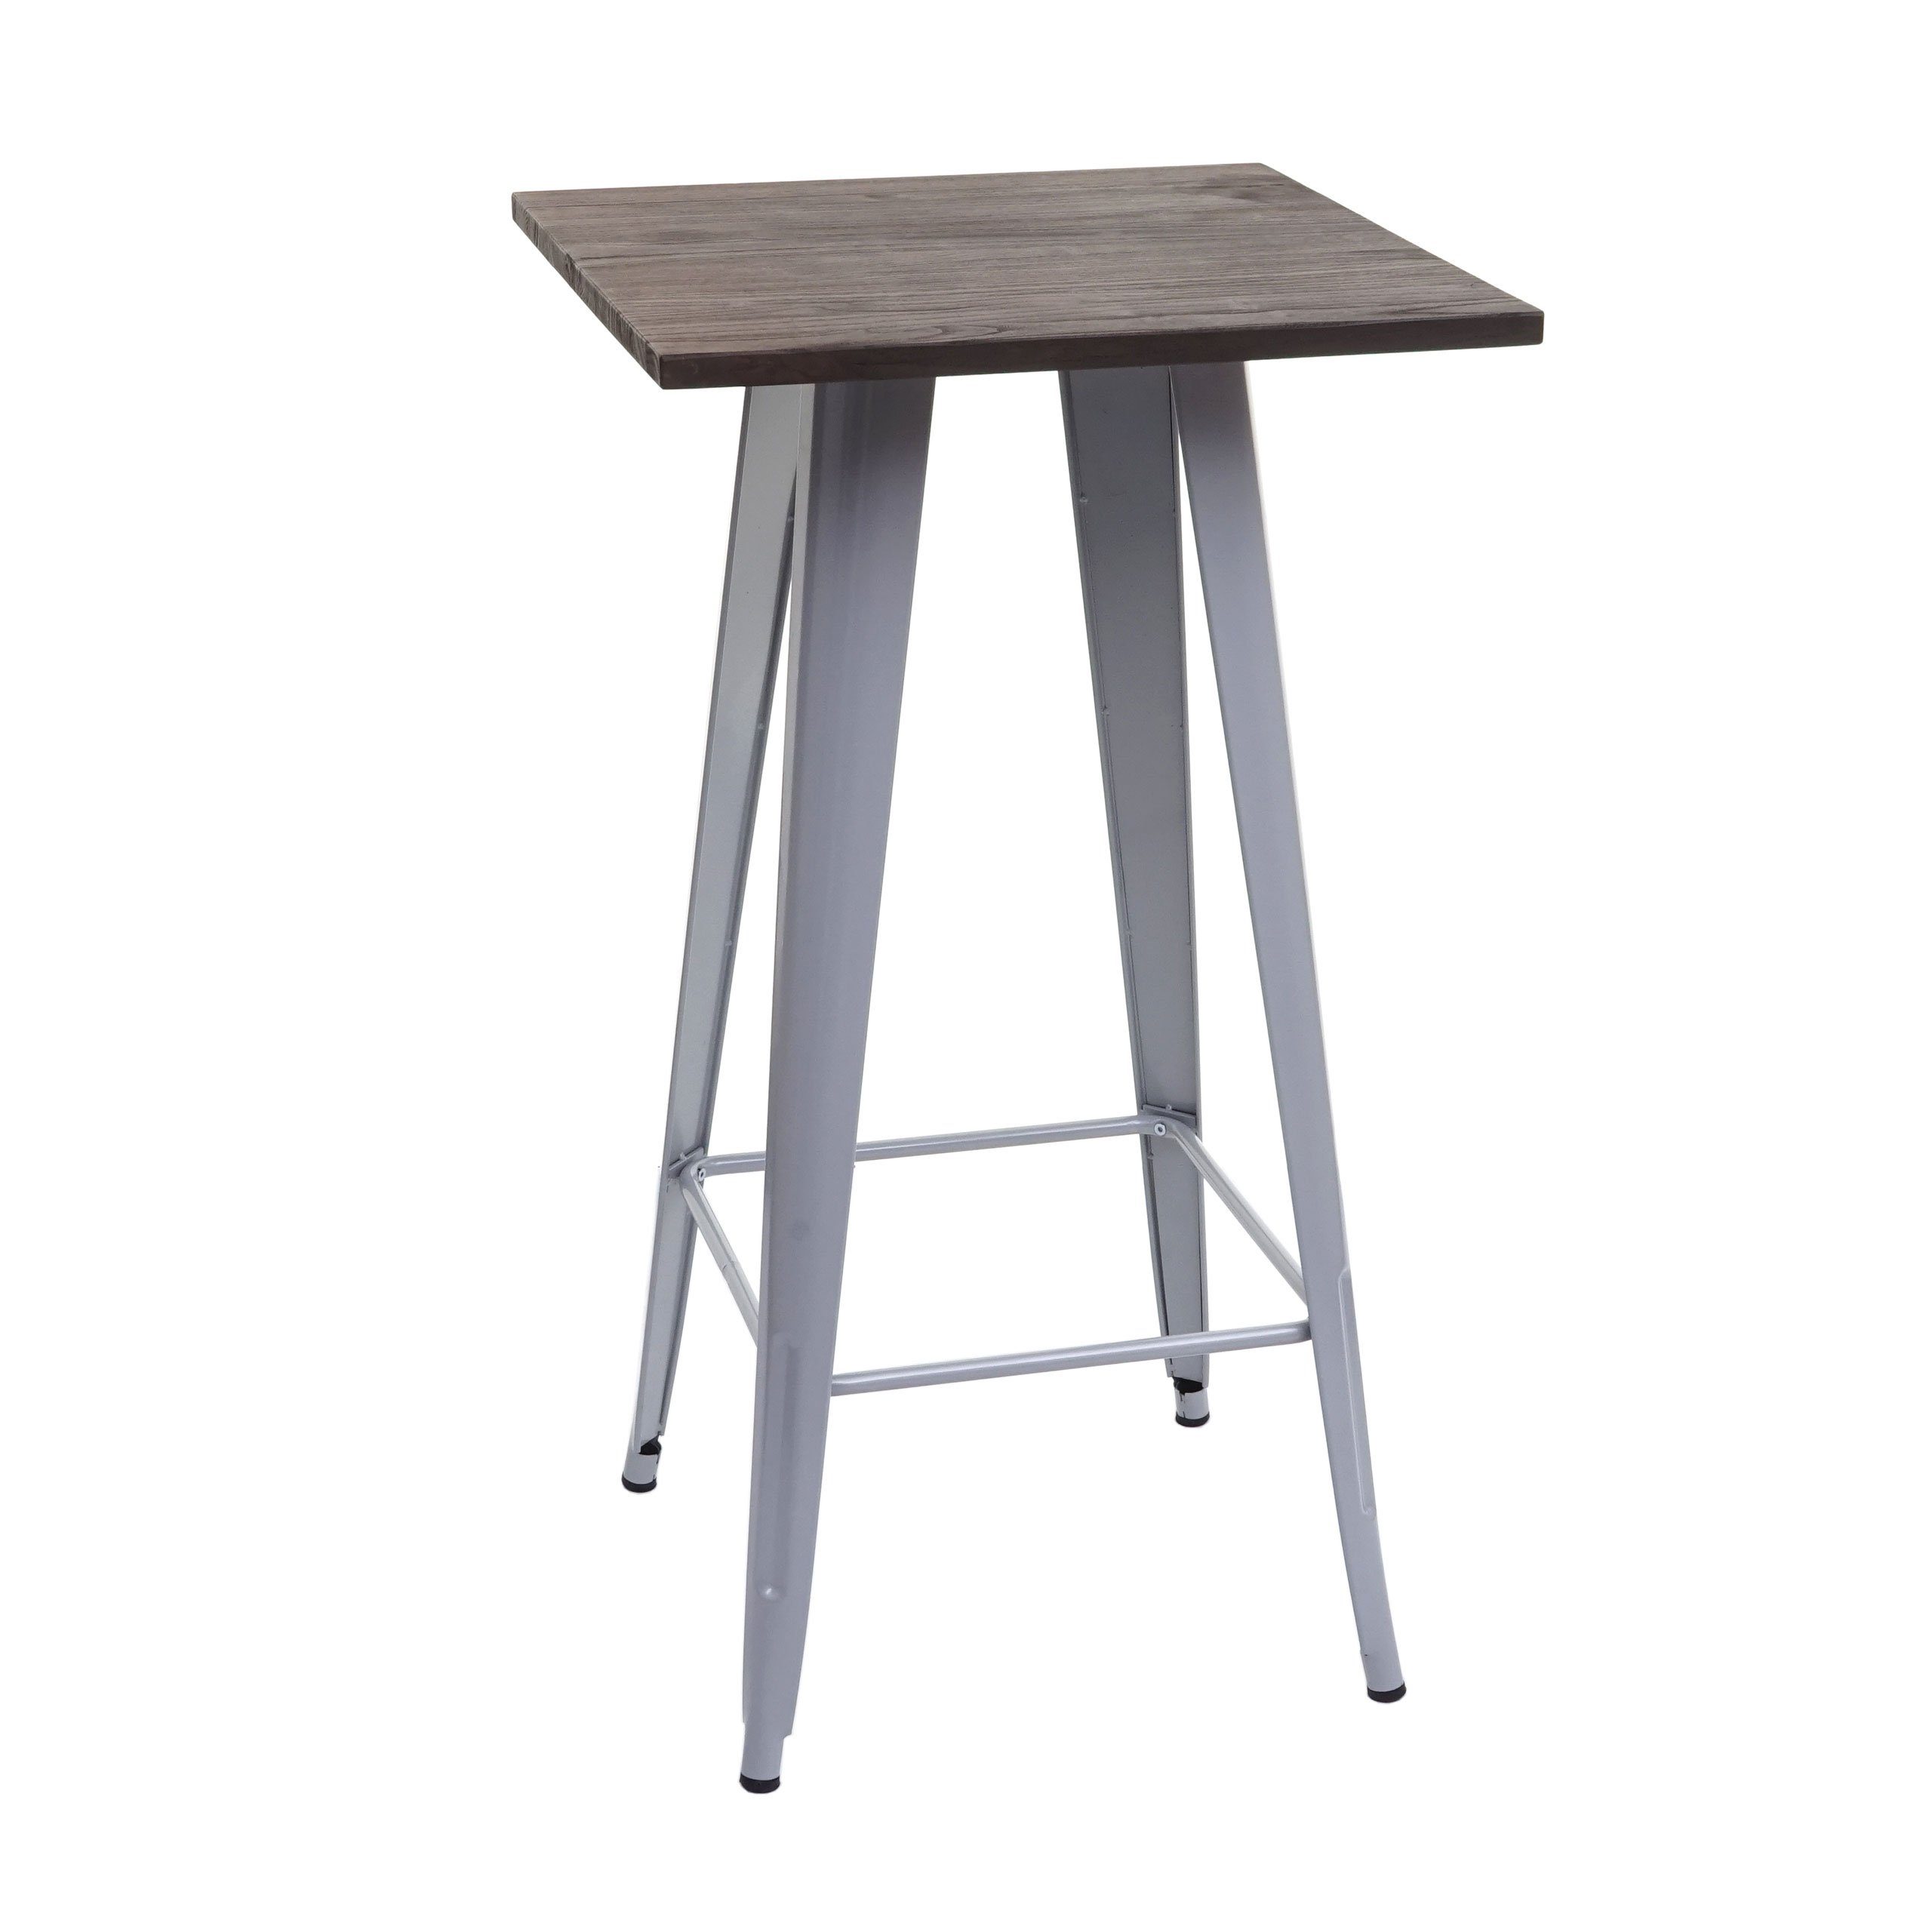 MCW Bartisch MCW-A73-Tisch, Industriedesign, Holztischplatte grau,braun